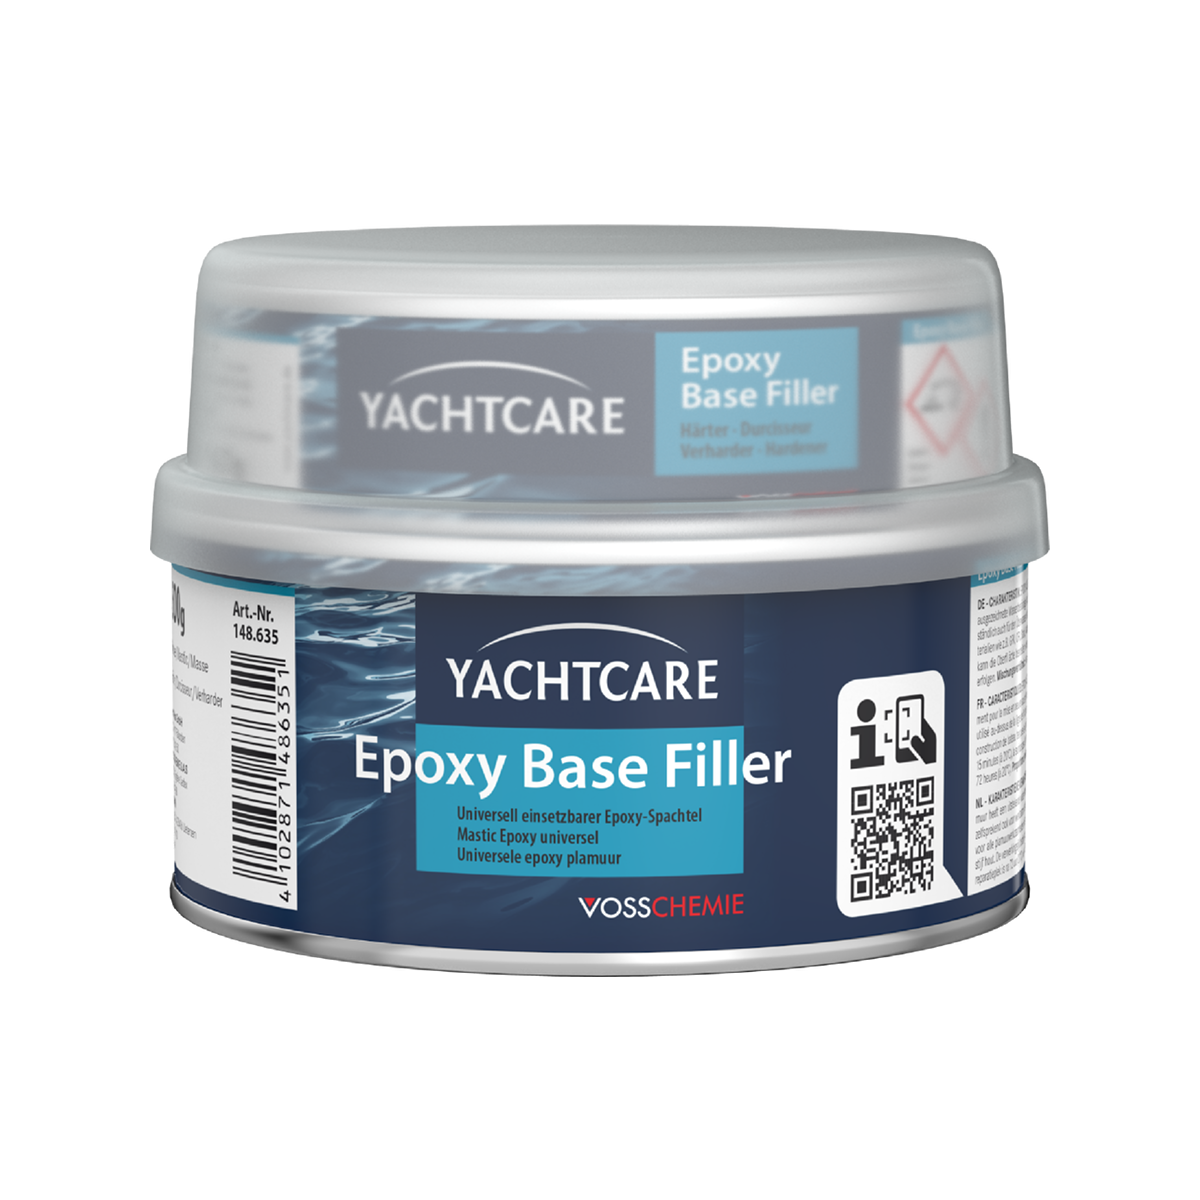 Yachtcare Epoxy Base Filler plamuur lichtgrijs - 2000g